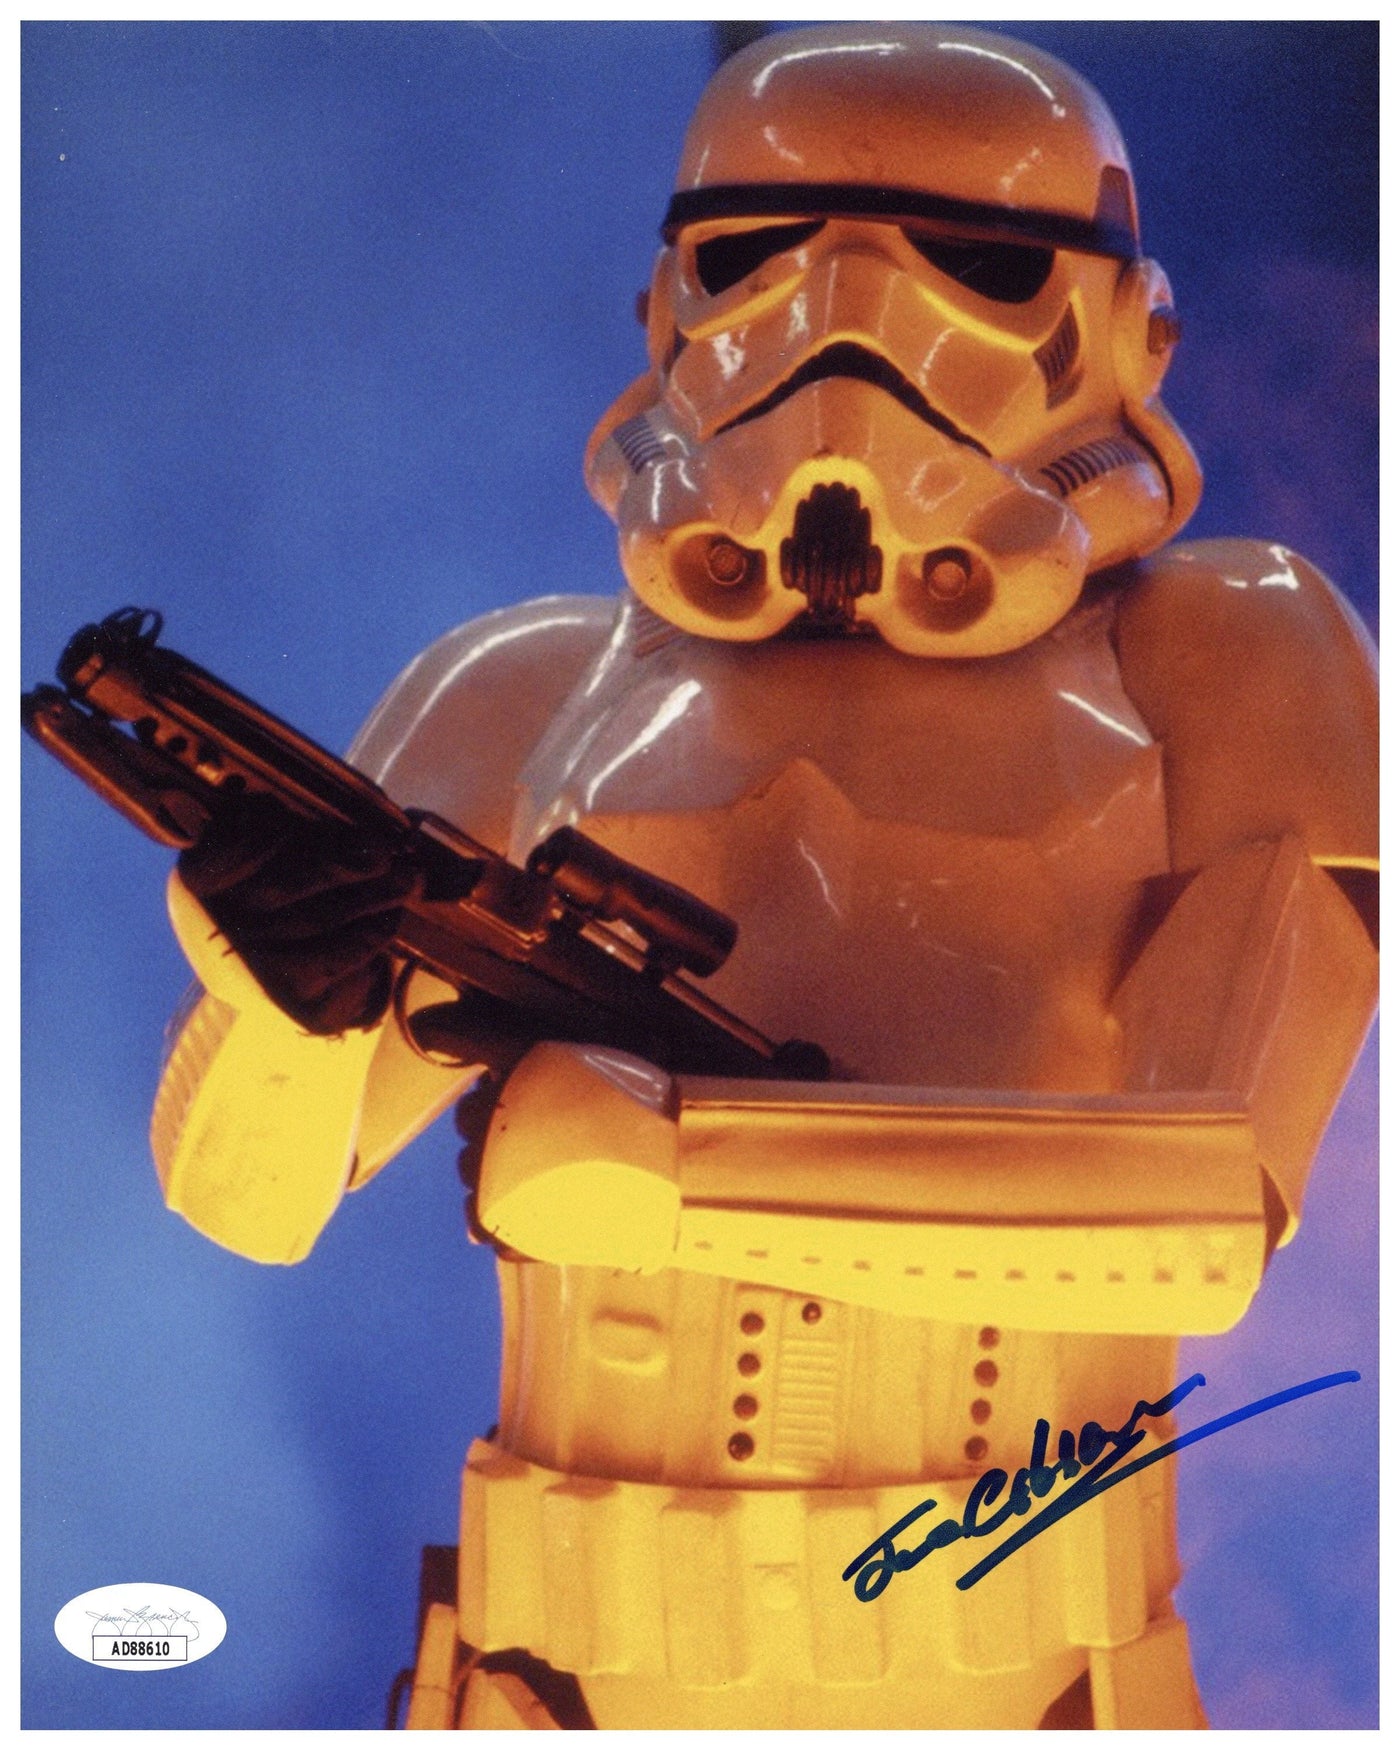 Star Wars Stormtrooper Joe Gibson Autographed 8x10 Photo Beckett COA